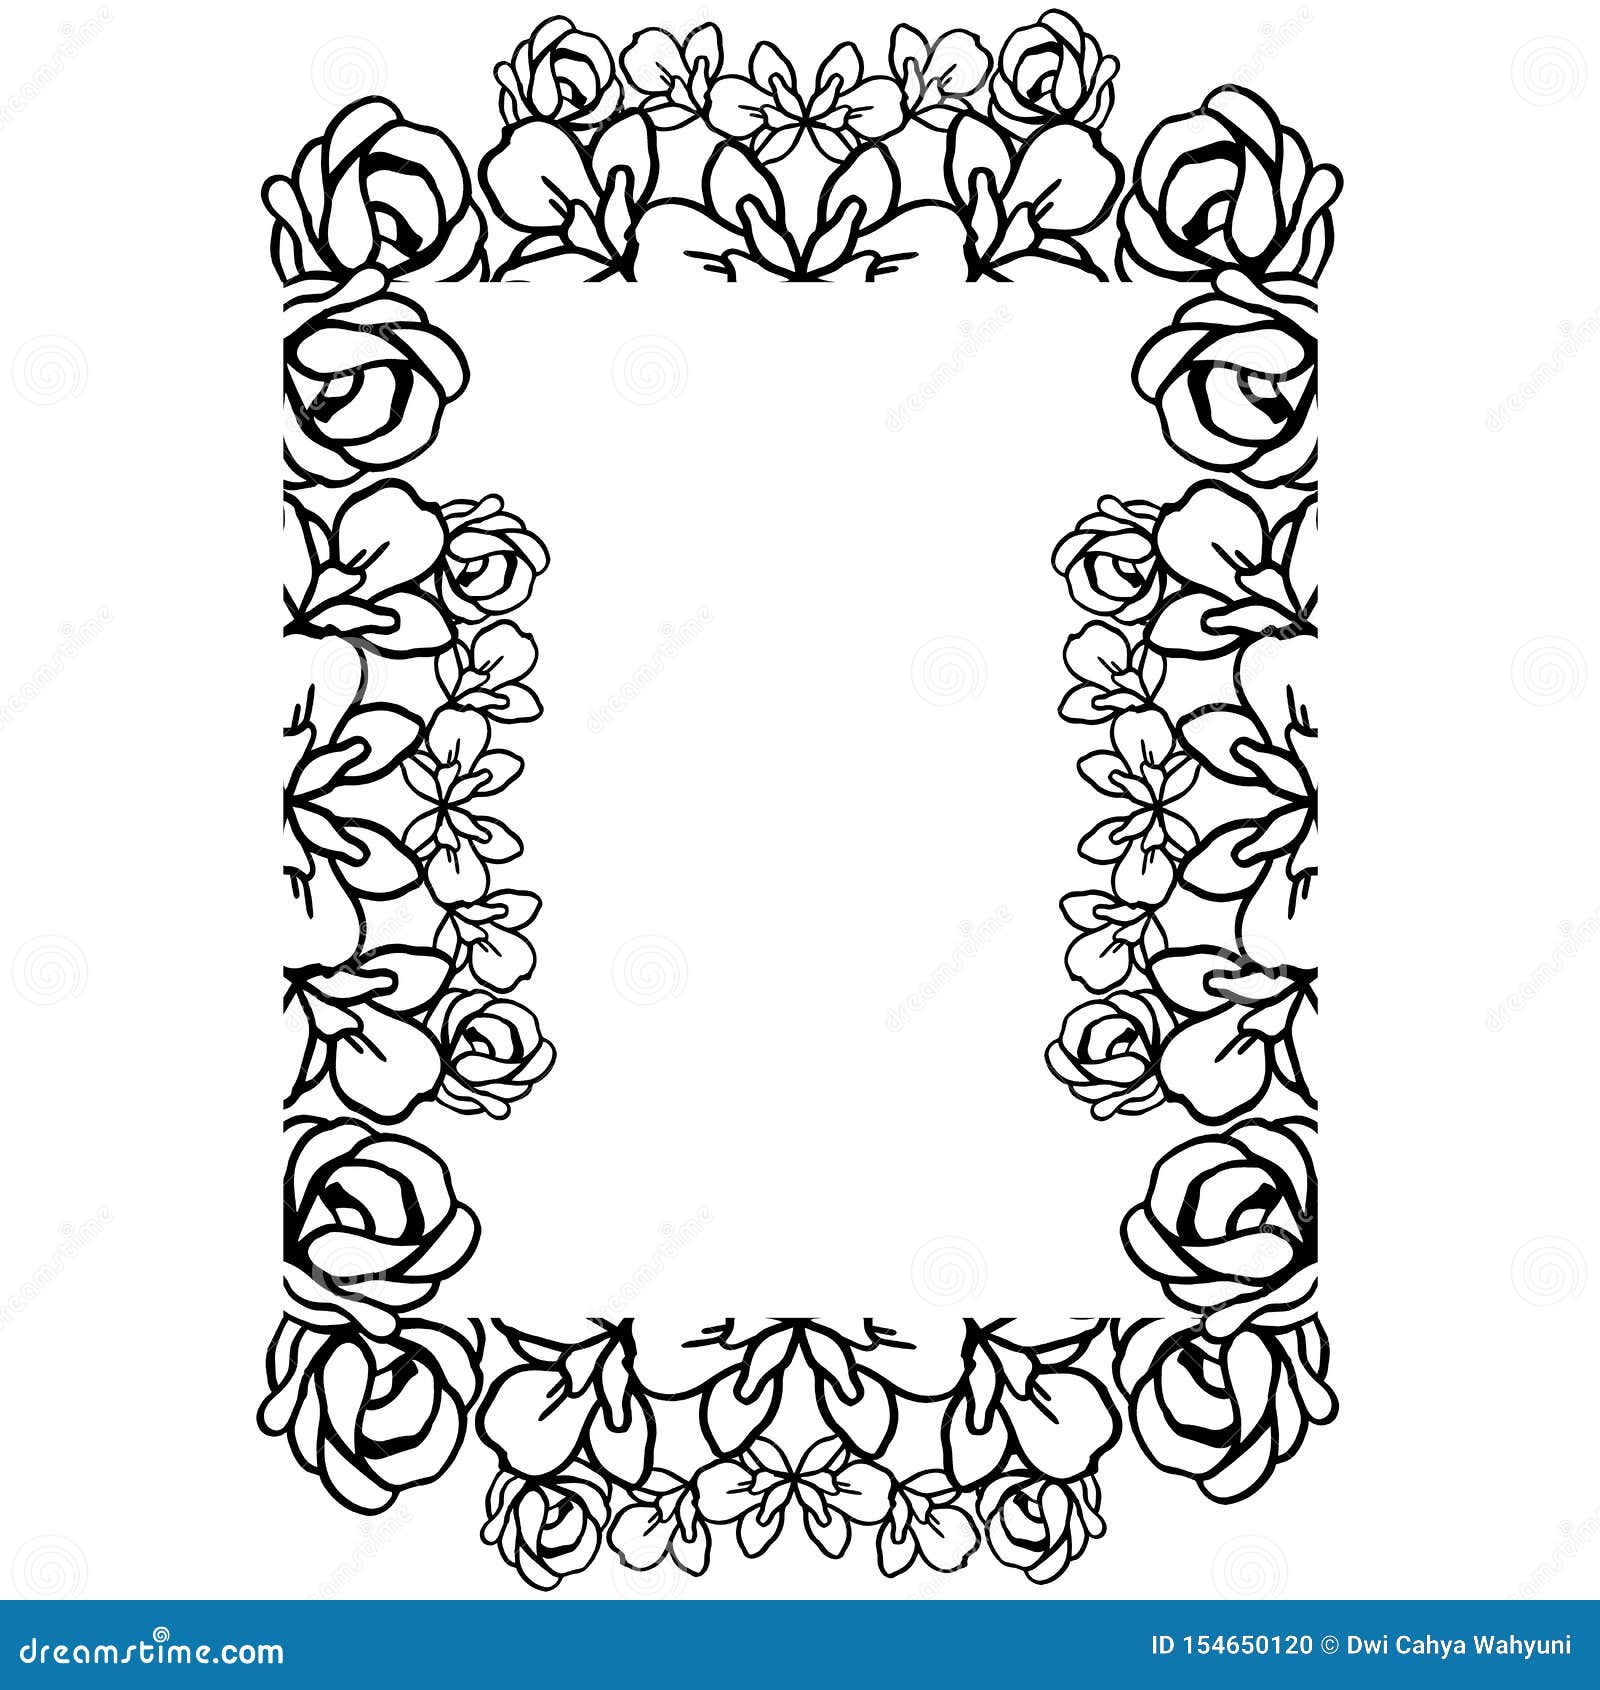 Beautiful floral border pattern frame, design various greeting